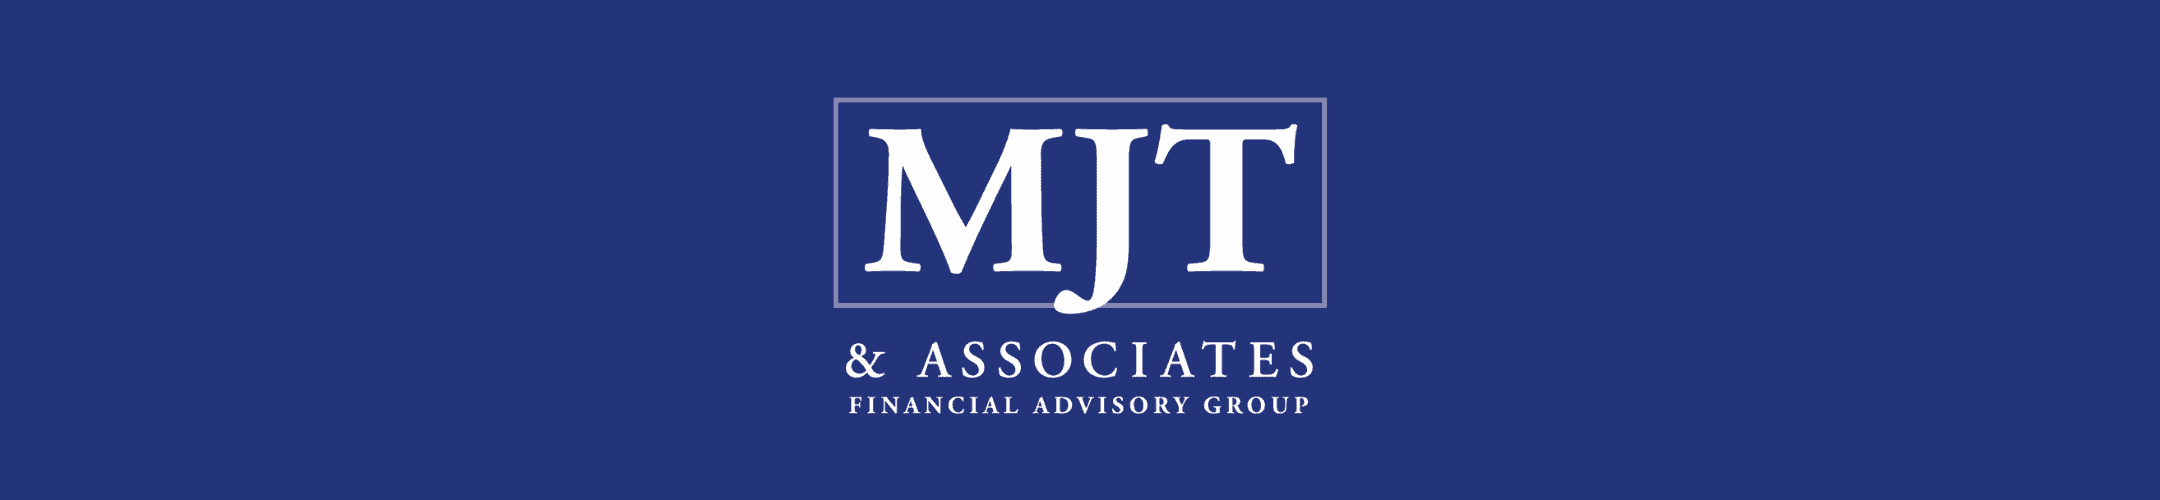 Logo of mjt & associates financial advisory group on a dark blue background.